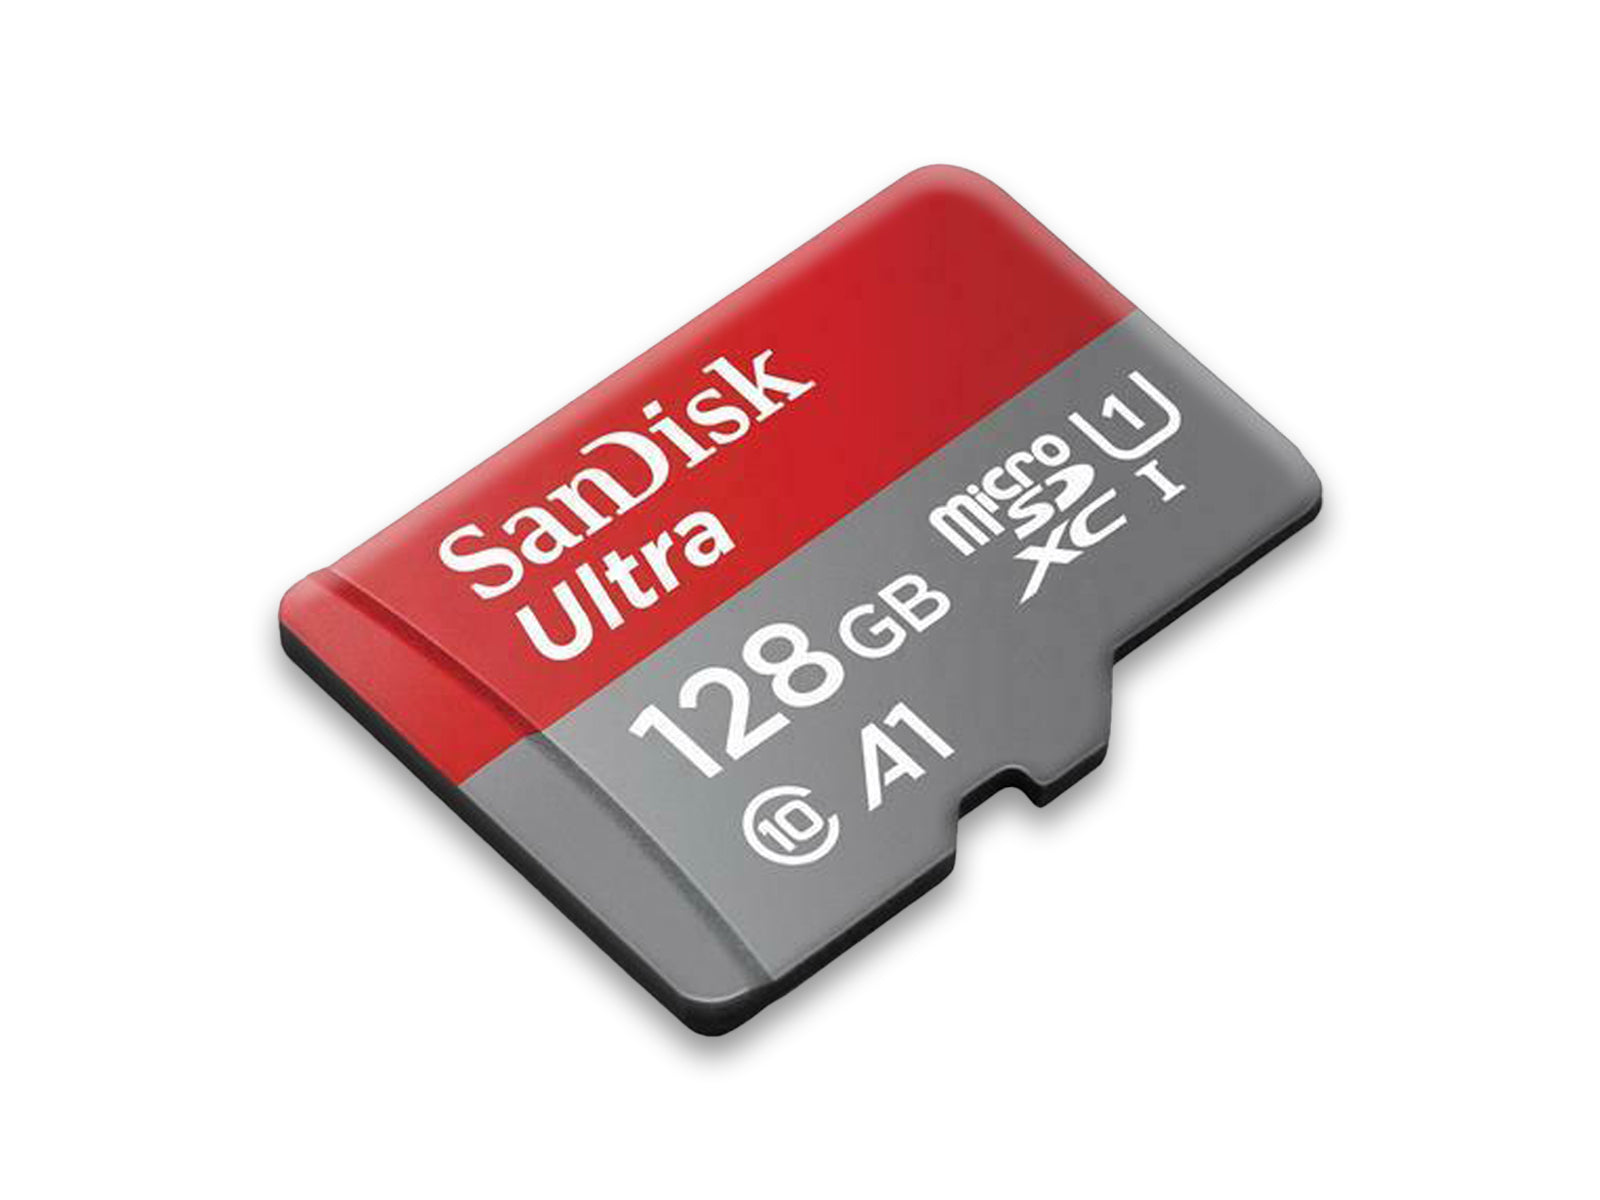 Buy Intenso 16 GB Micro SDHC-Card microSDHC card 16 GB Class 4